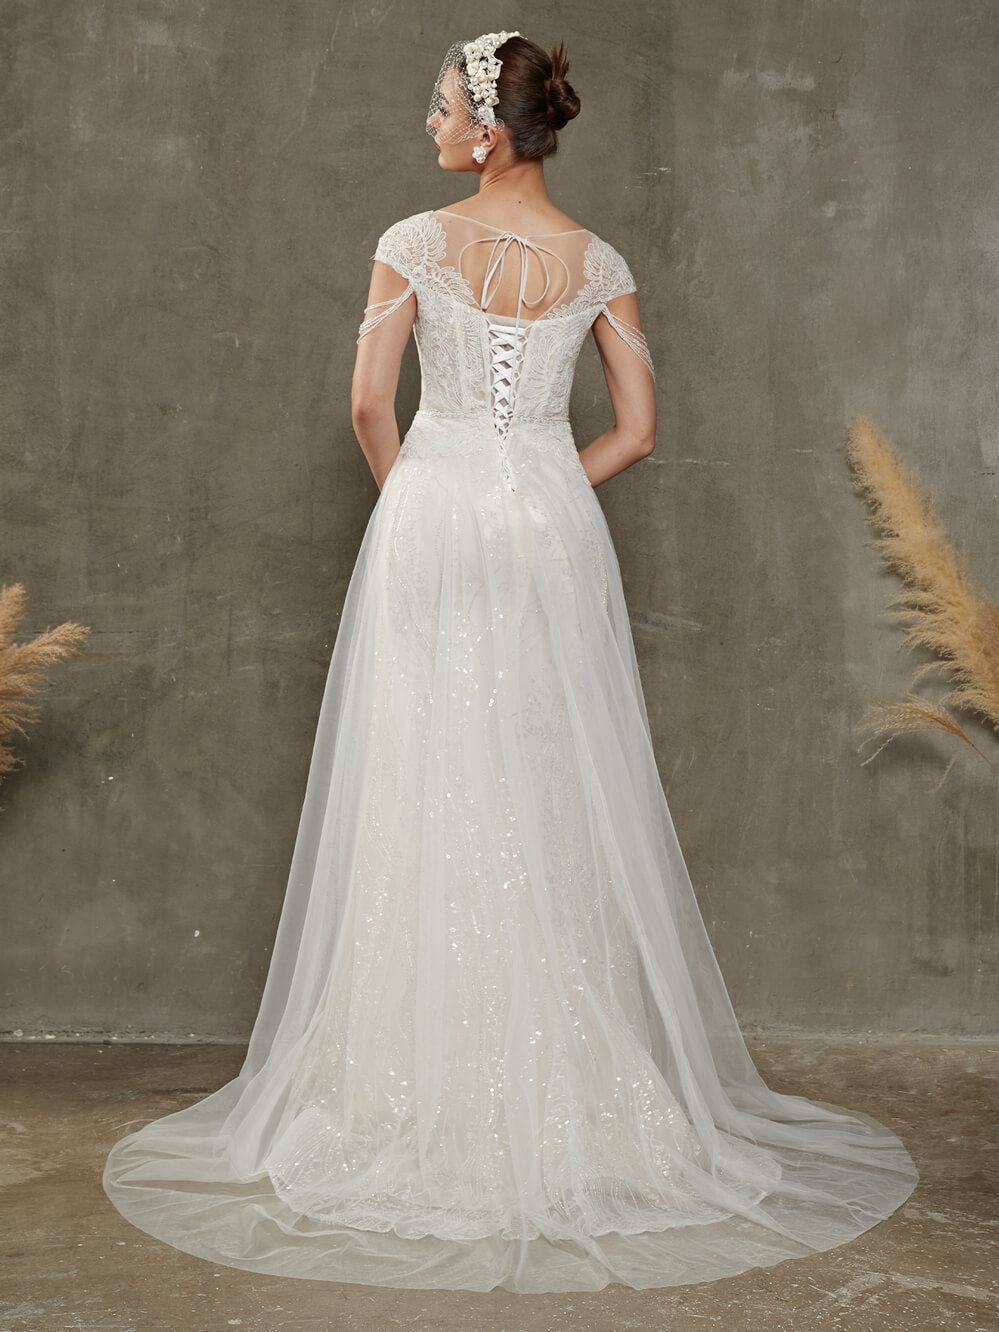  Diamond White Elegant Illusion Lace Tulle Cap Sleeve Mermaid Wedding Dress with Train Bellisima